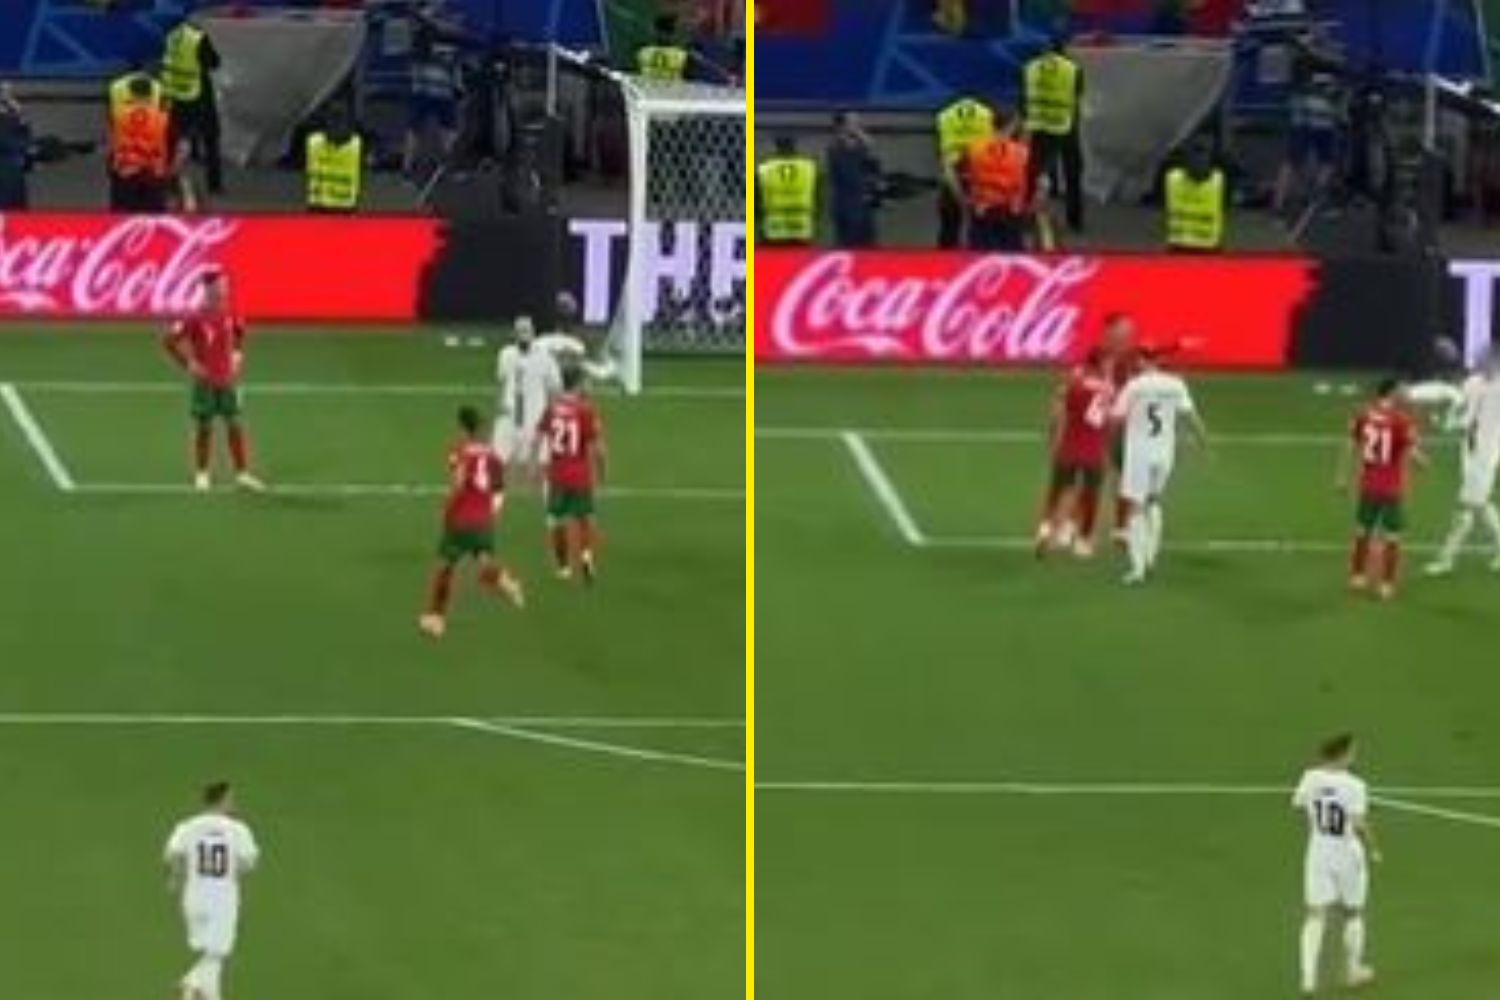 New footage shows Ruben Dias run length of pitch to console Cristiano Ronaldo while Diogo Dalot puts arm around him